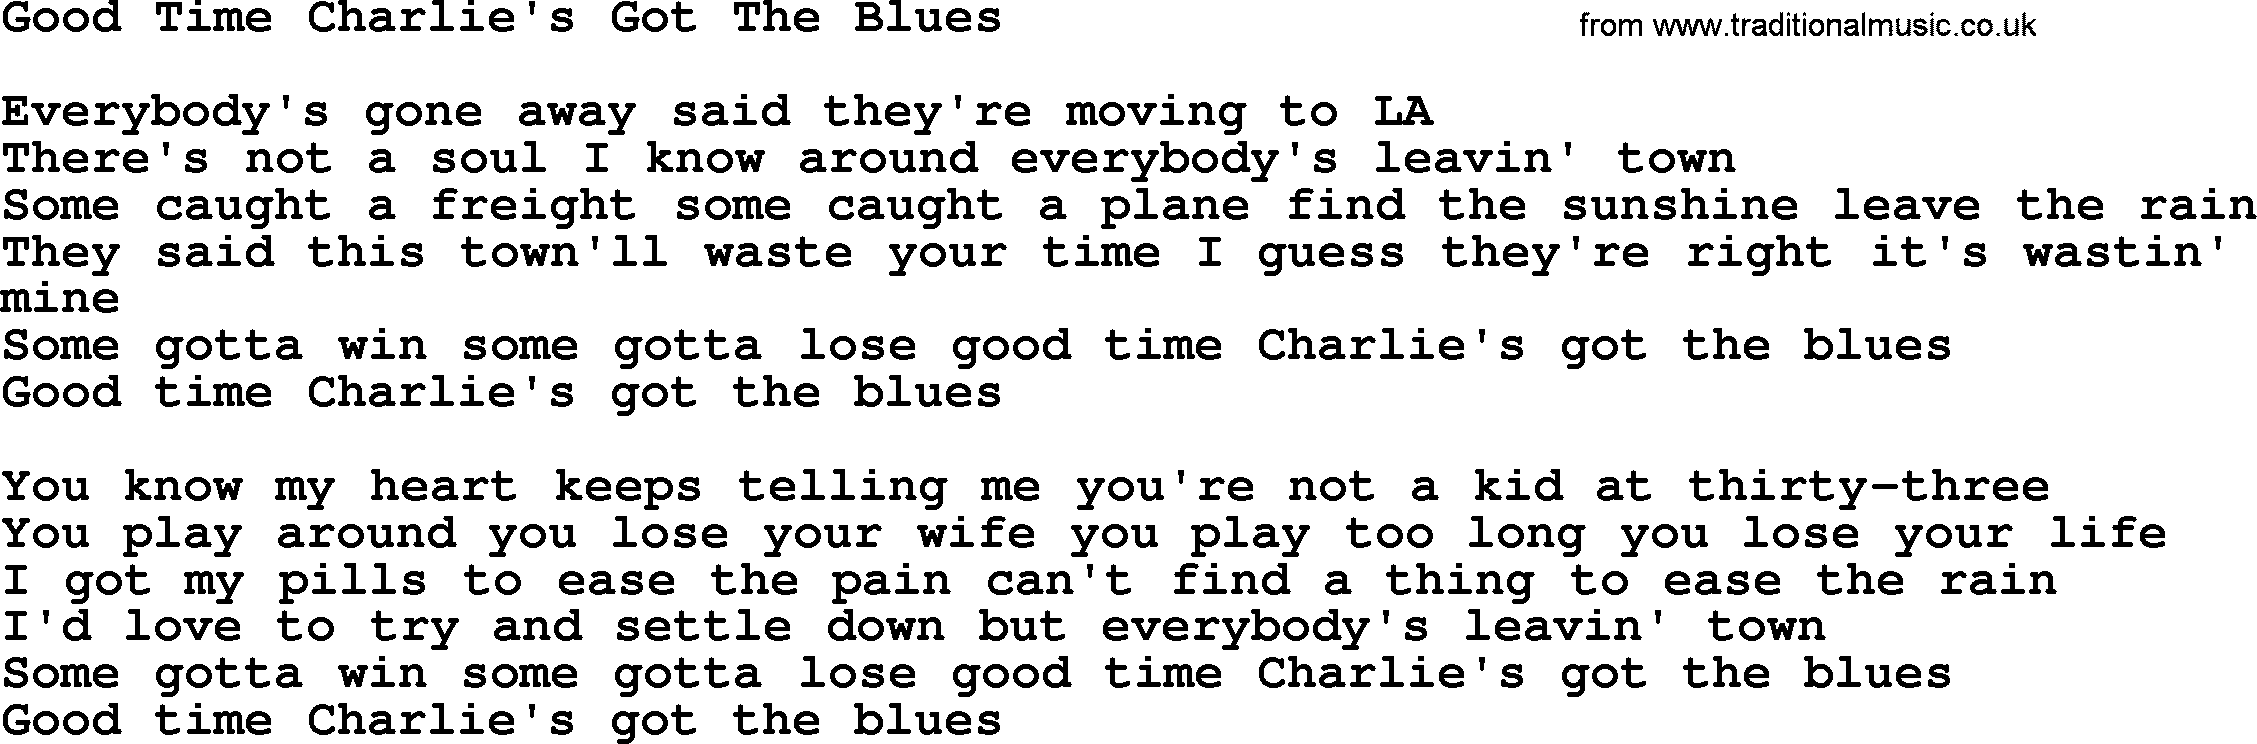 Willie Nelson Song Good Time Charlie S Got The Blues Lyrics